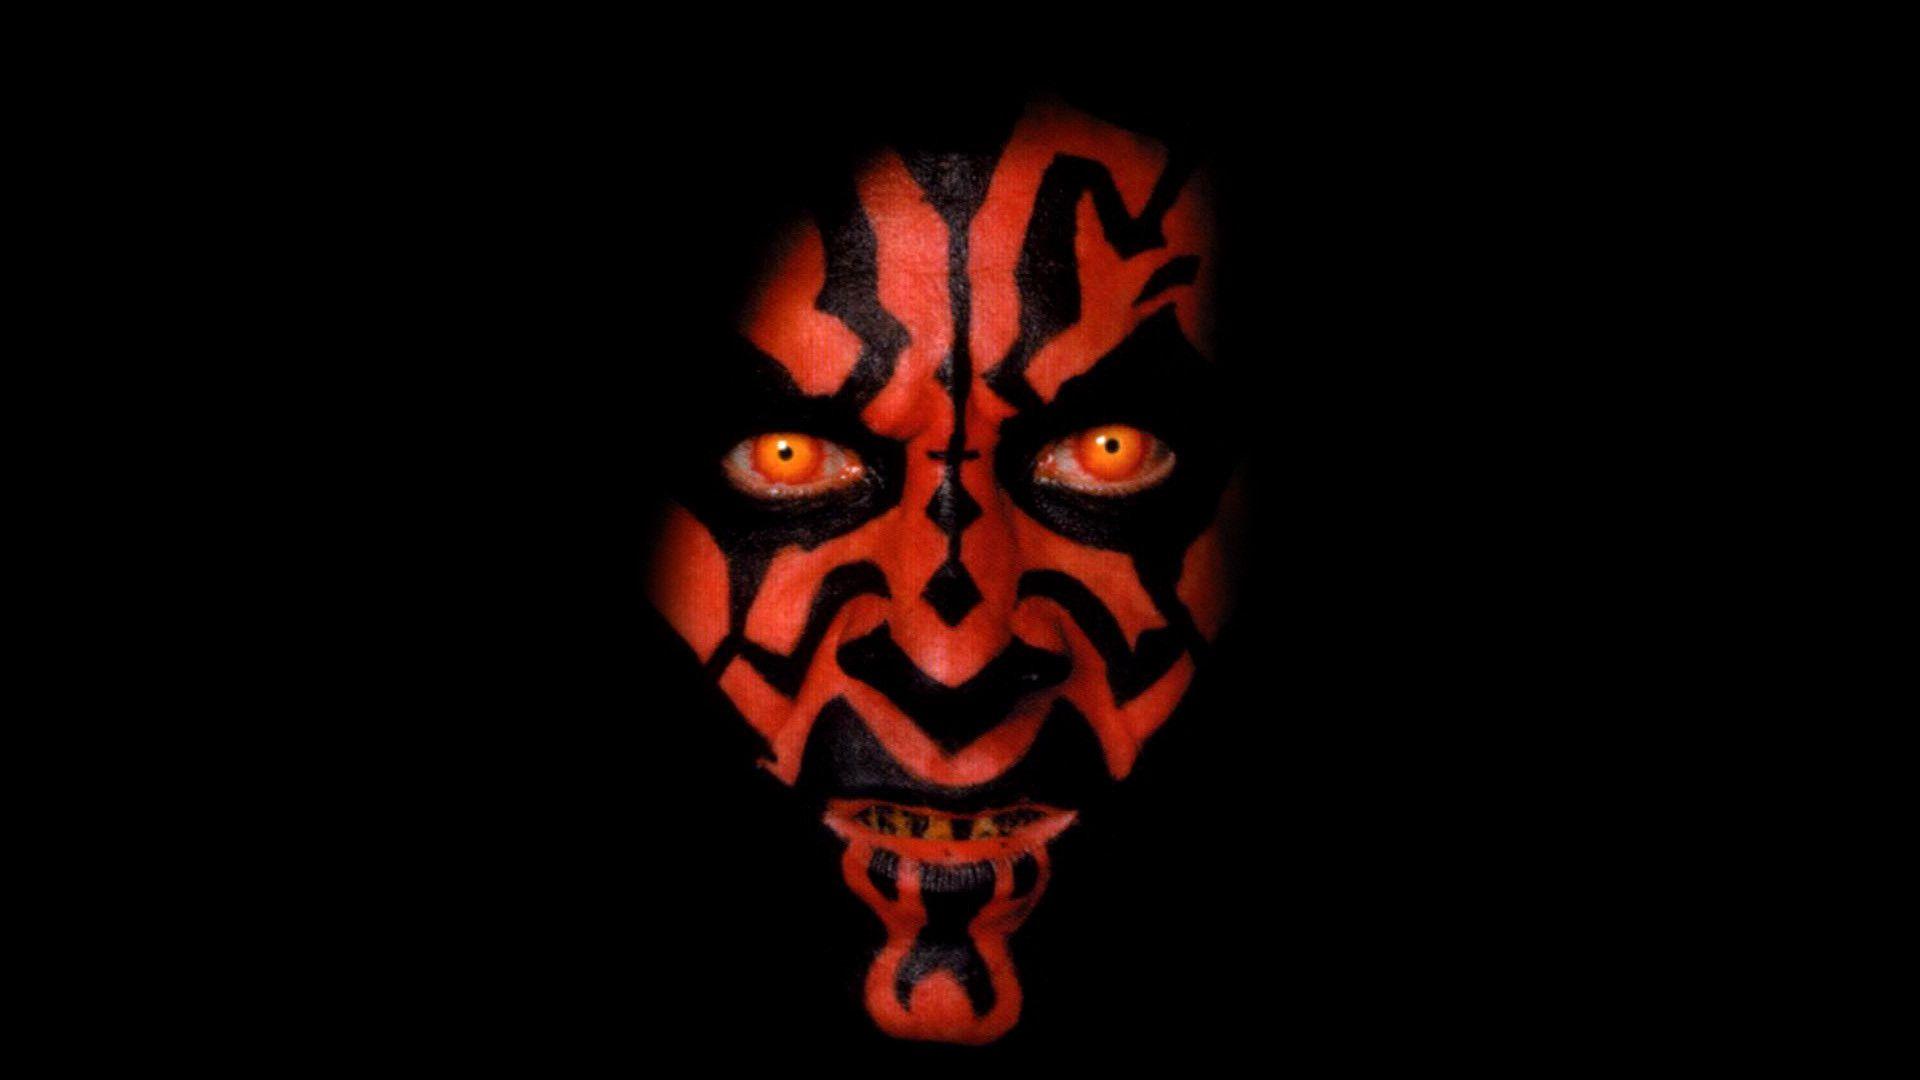 Download Darth Vader Wallpaper Star Wars Free Download